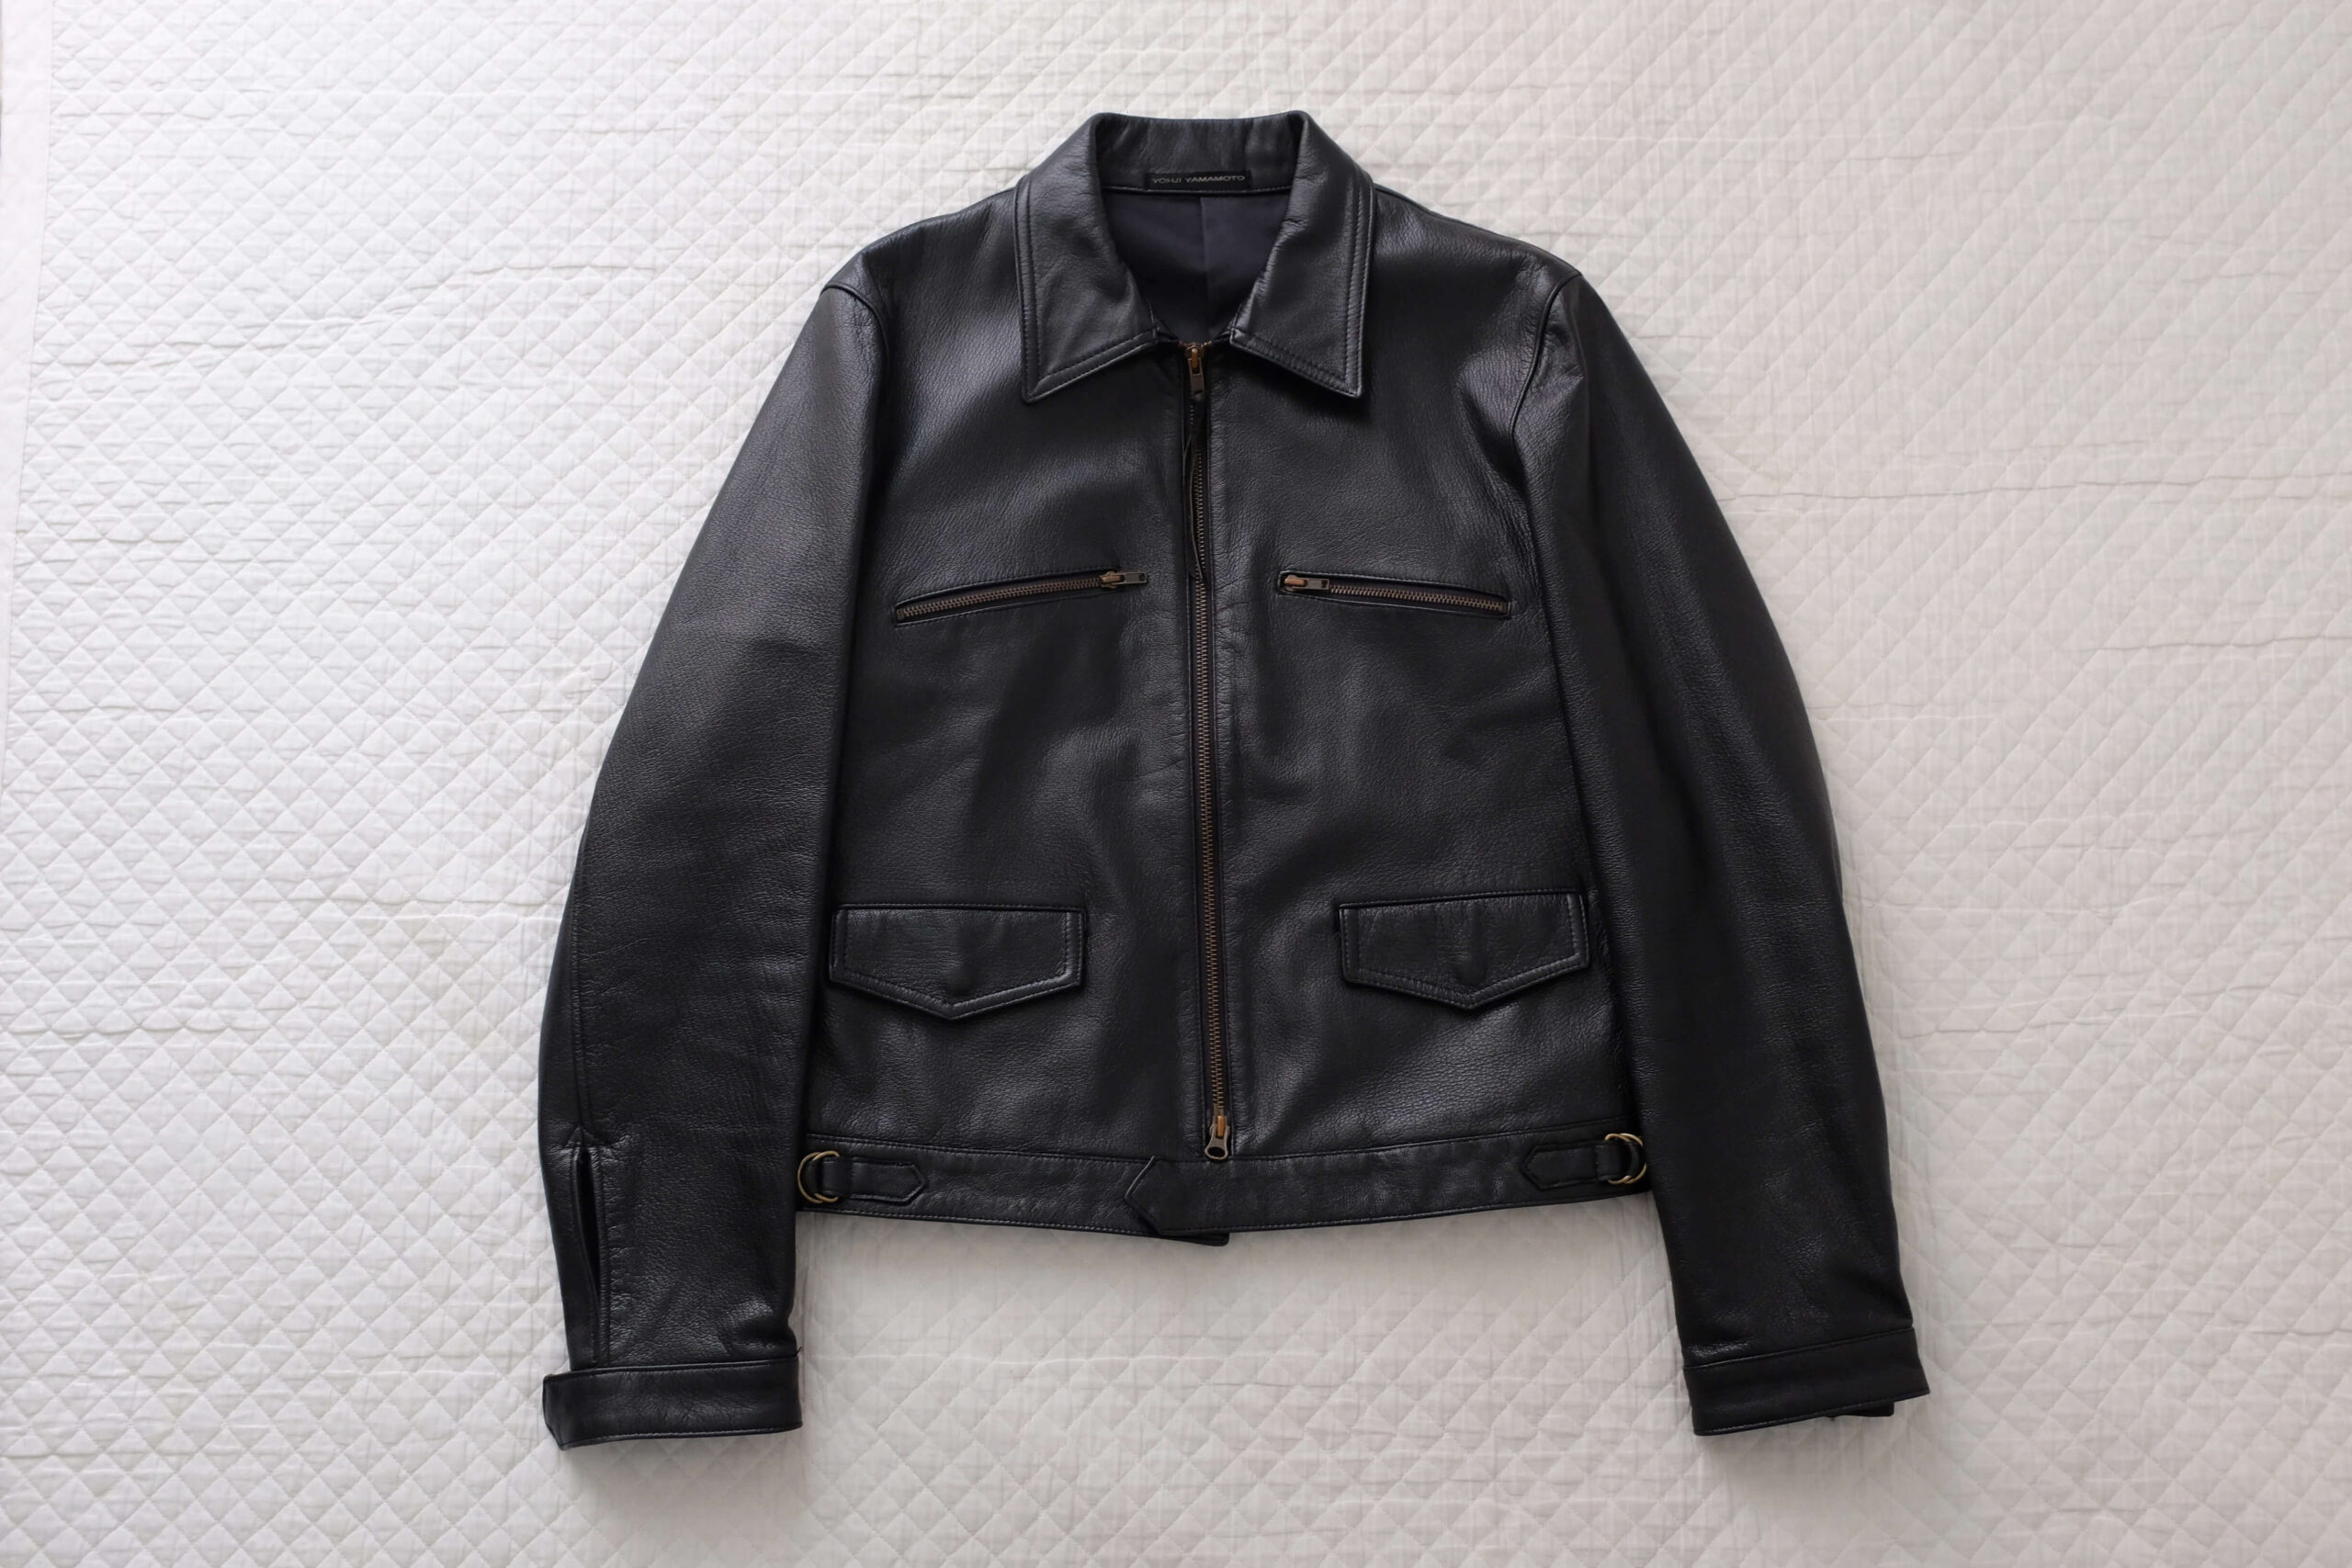 Yohji Yamamoto Black Leather Jacket - Maker of Jacket